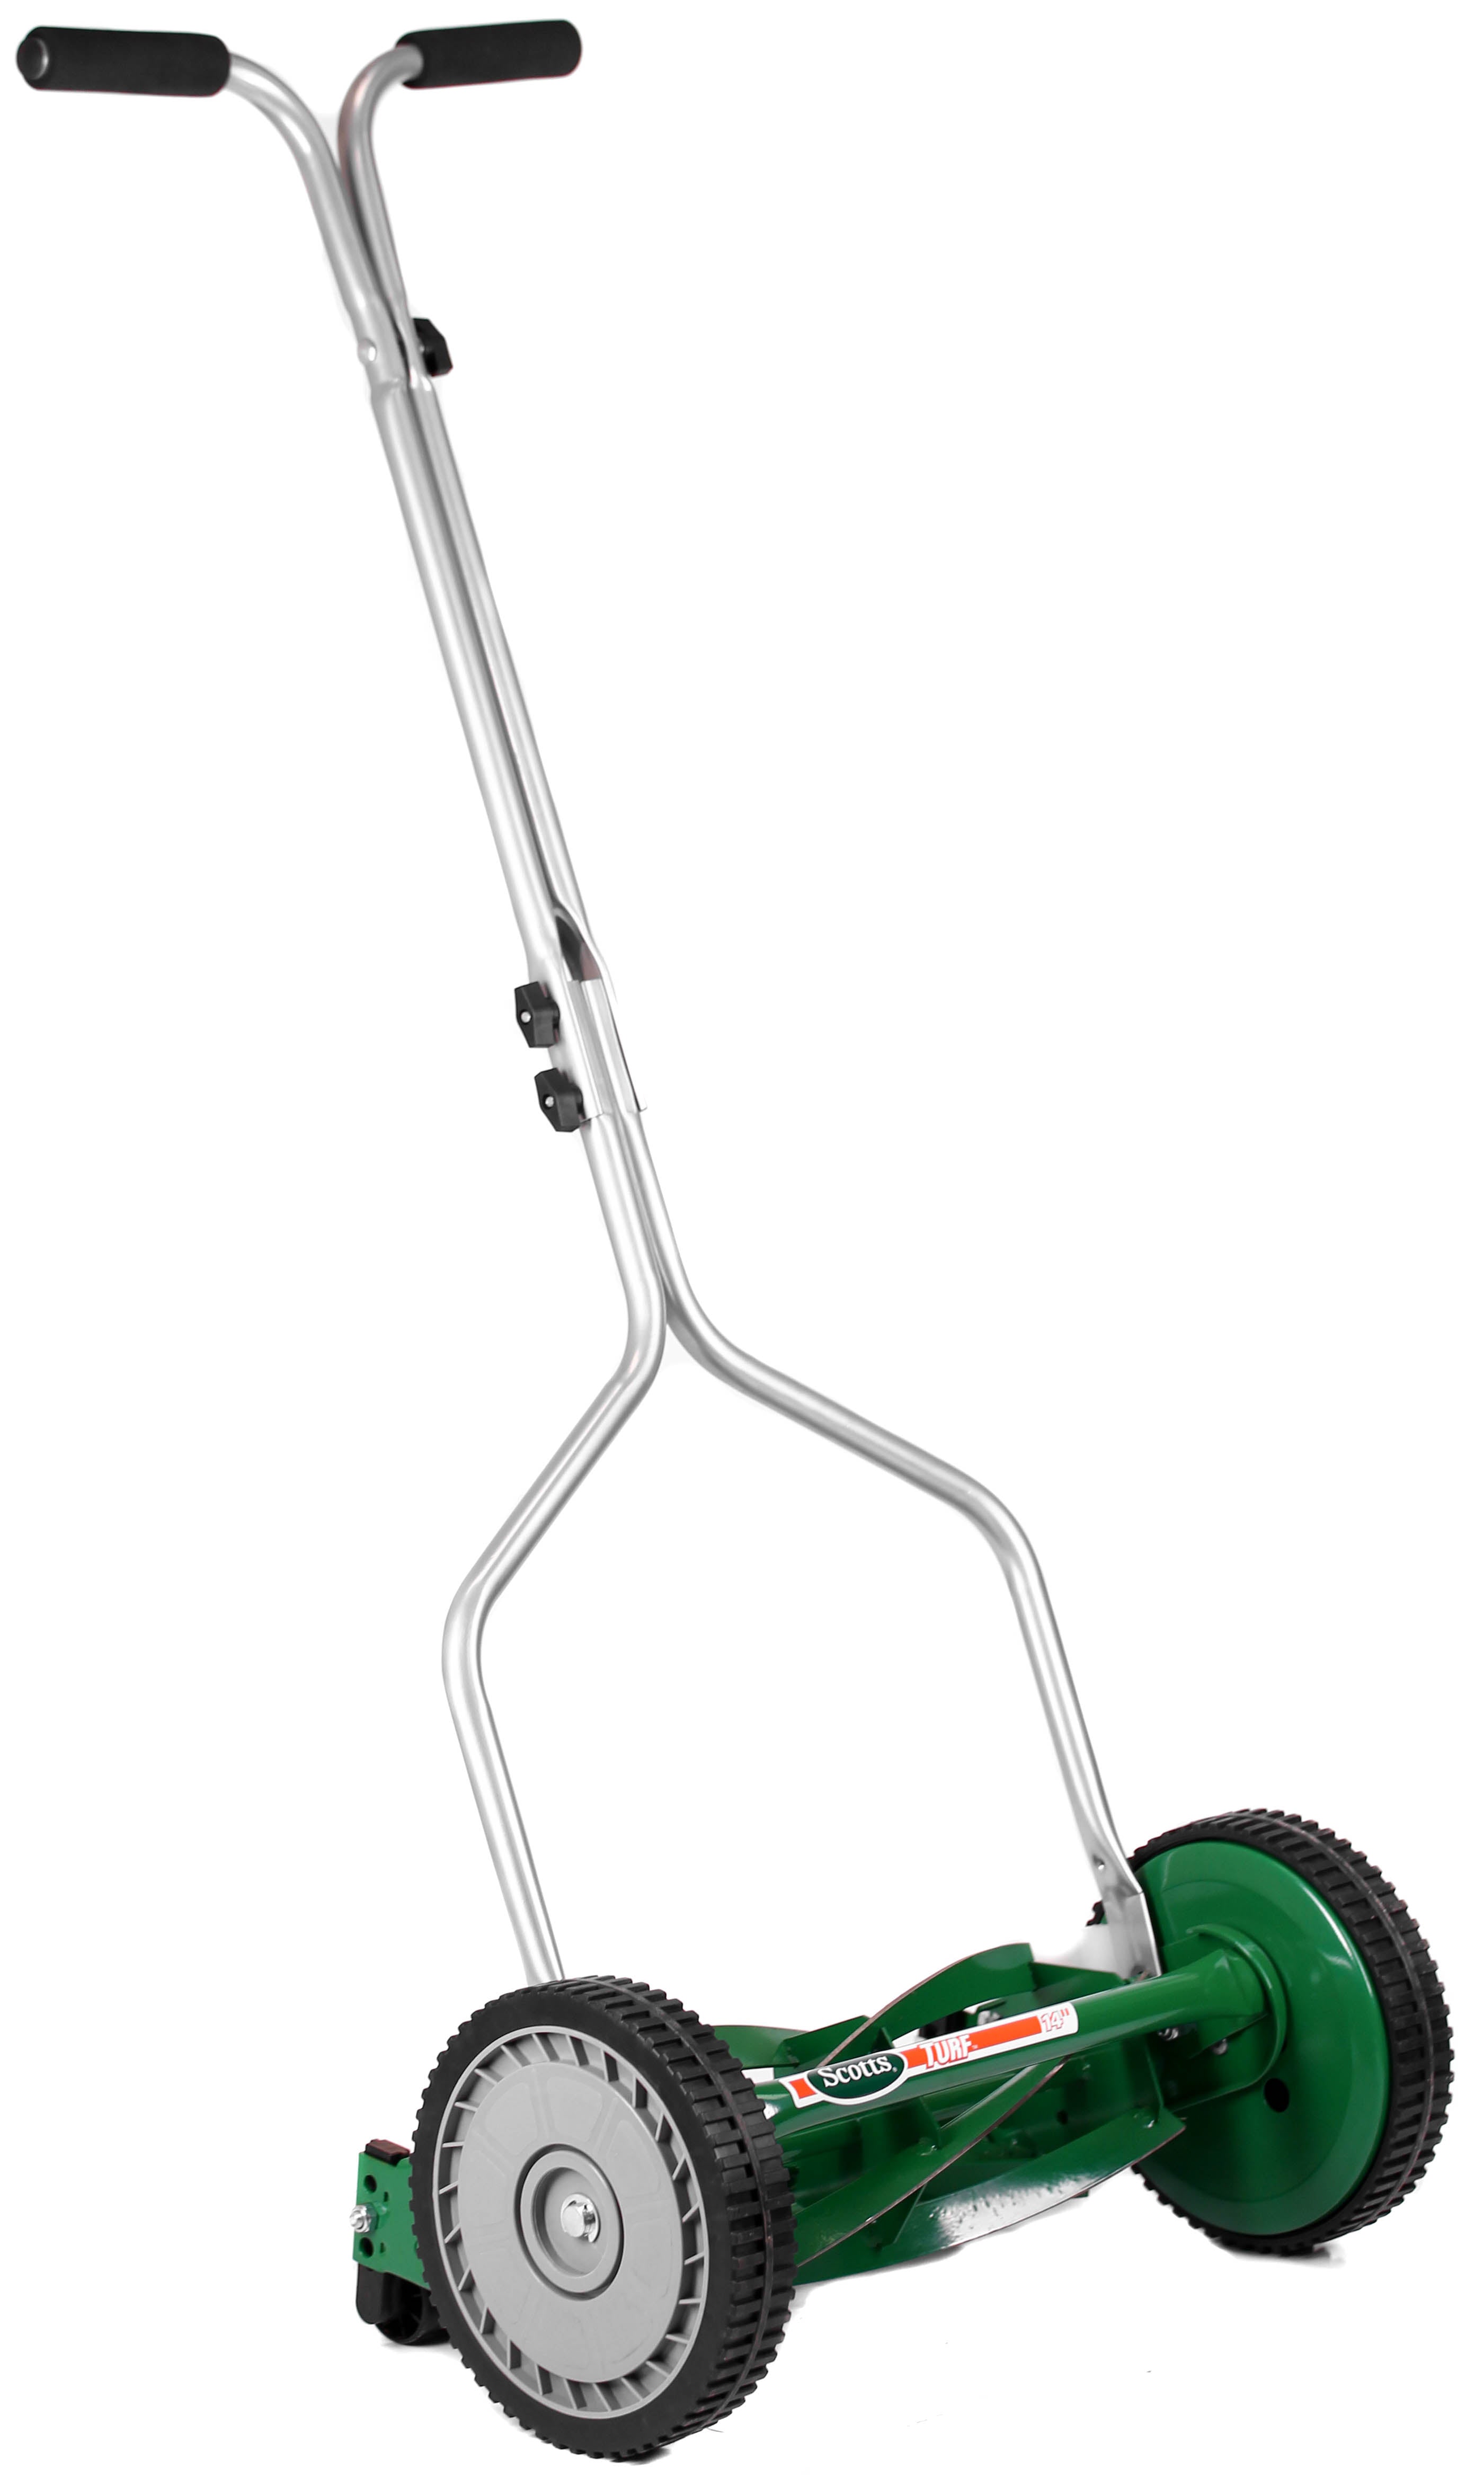 Scotts 14" Manual Reel Mower – American Lawn Mower Co. EST 1895